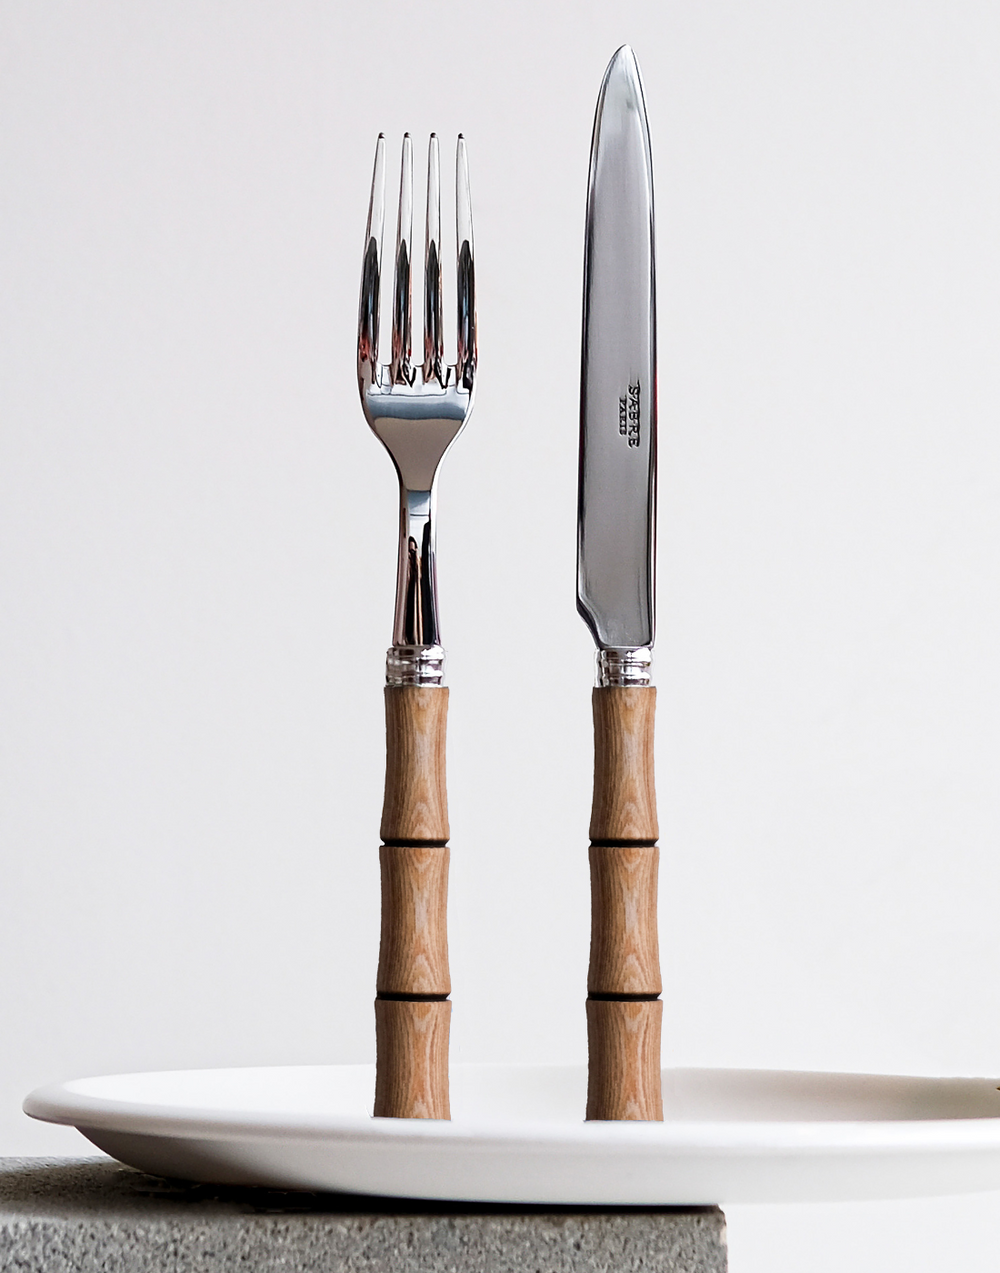 40-Piece Silverware Set with Steak Knives - 3 Designs!